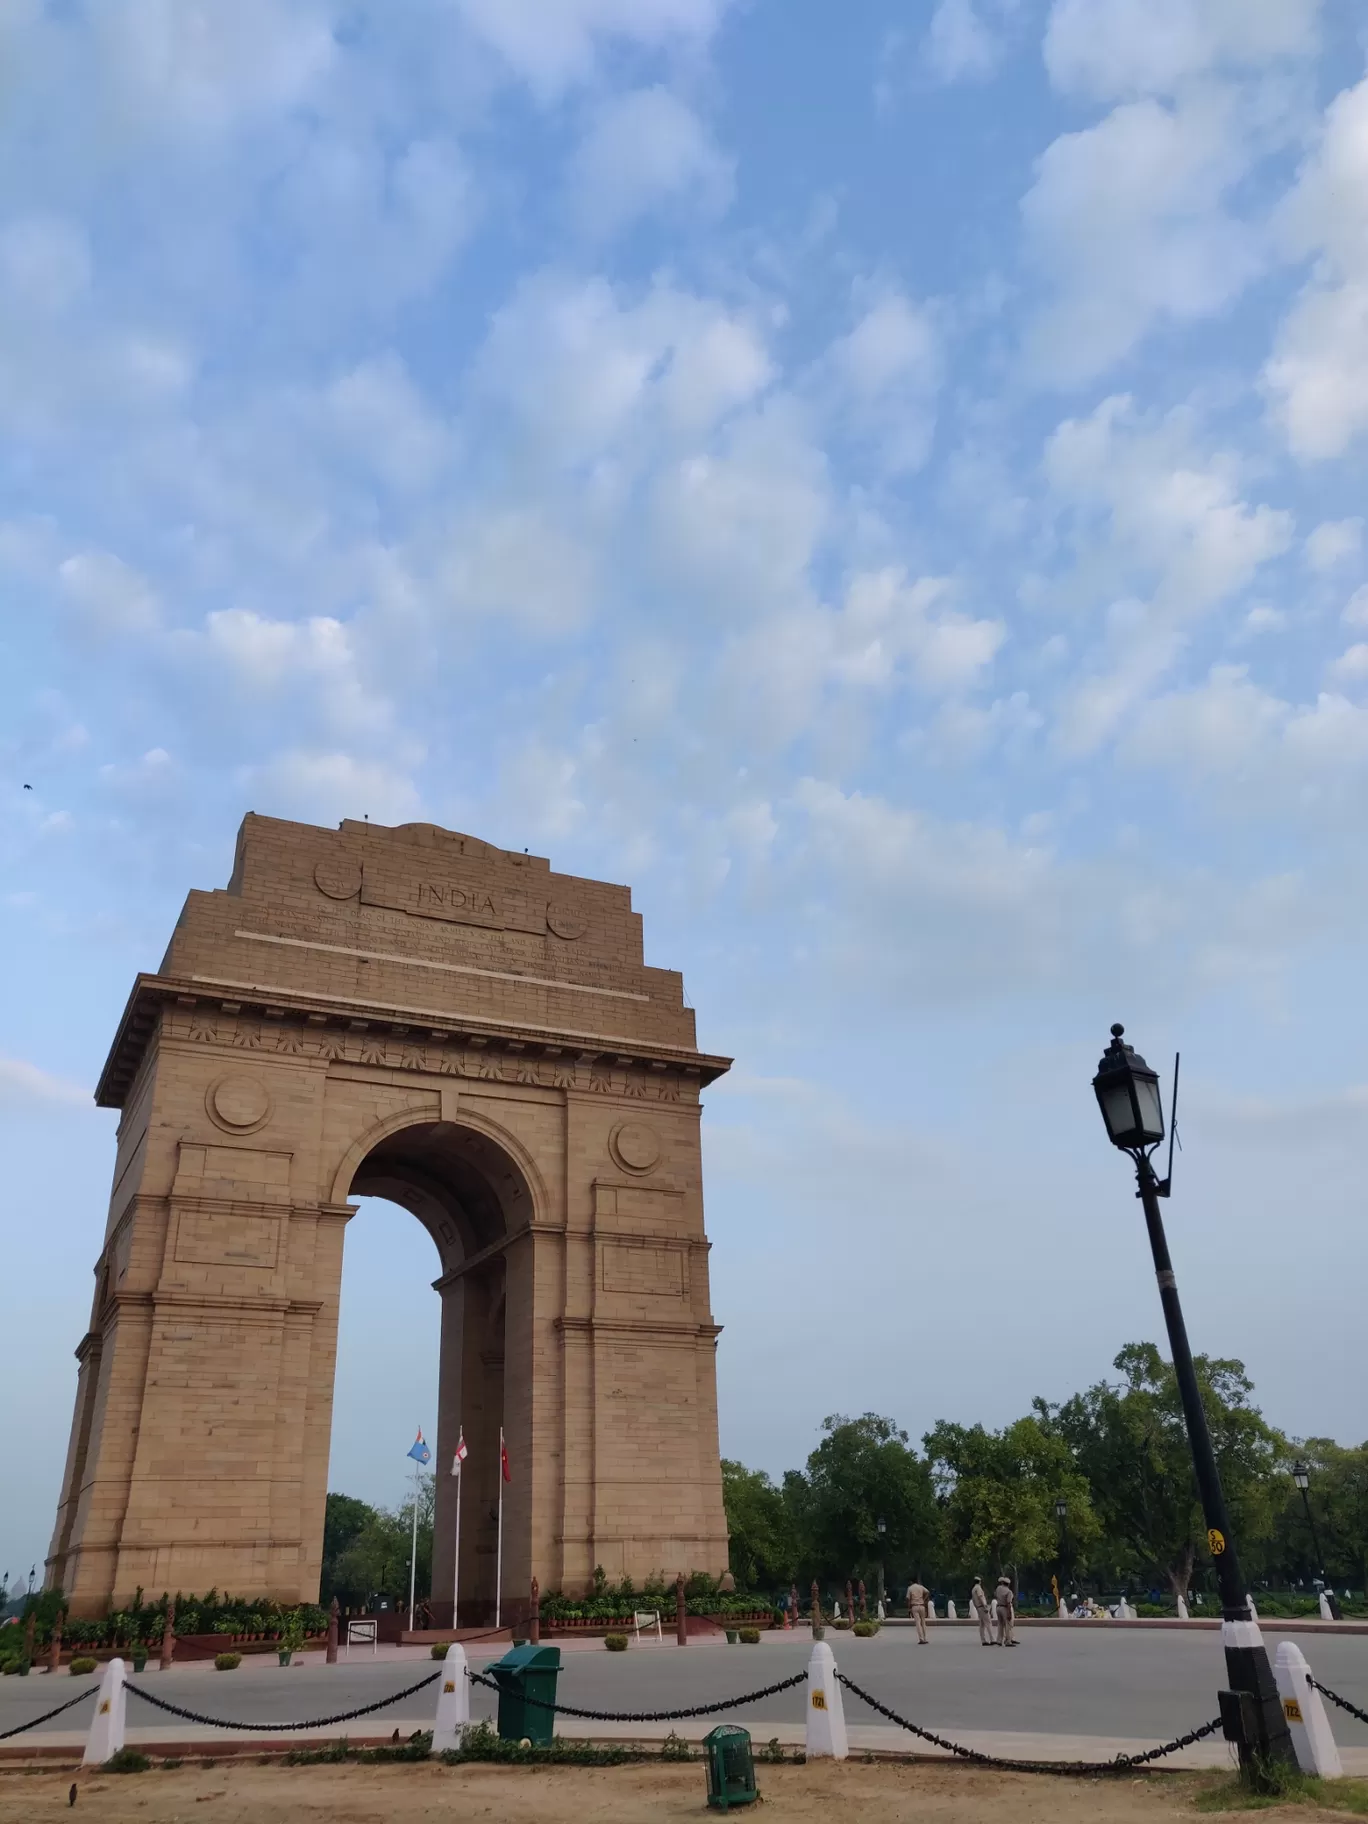 Photo of India Gate By Devesh Tiwari